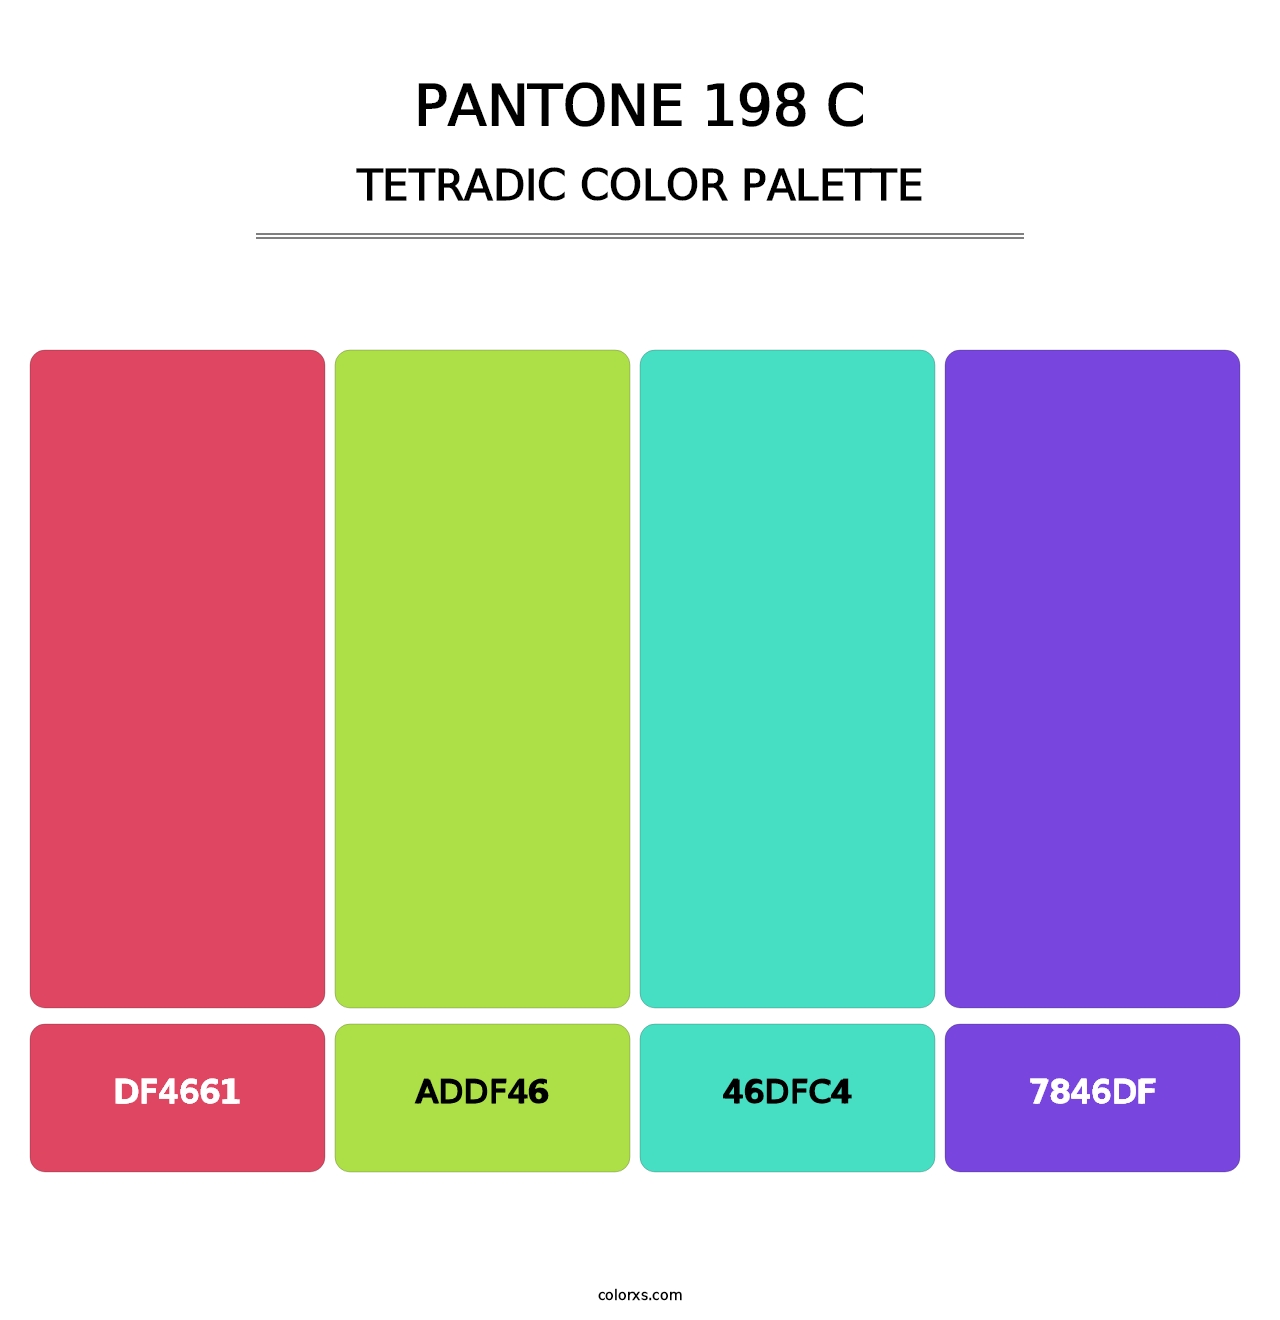 PANTONE 198 C - Tetradic Color Palette